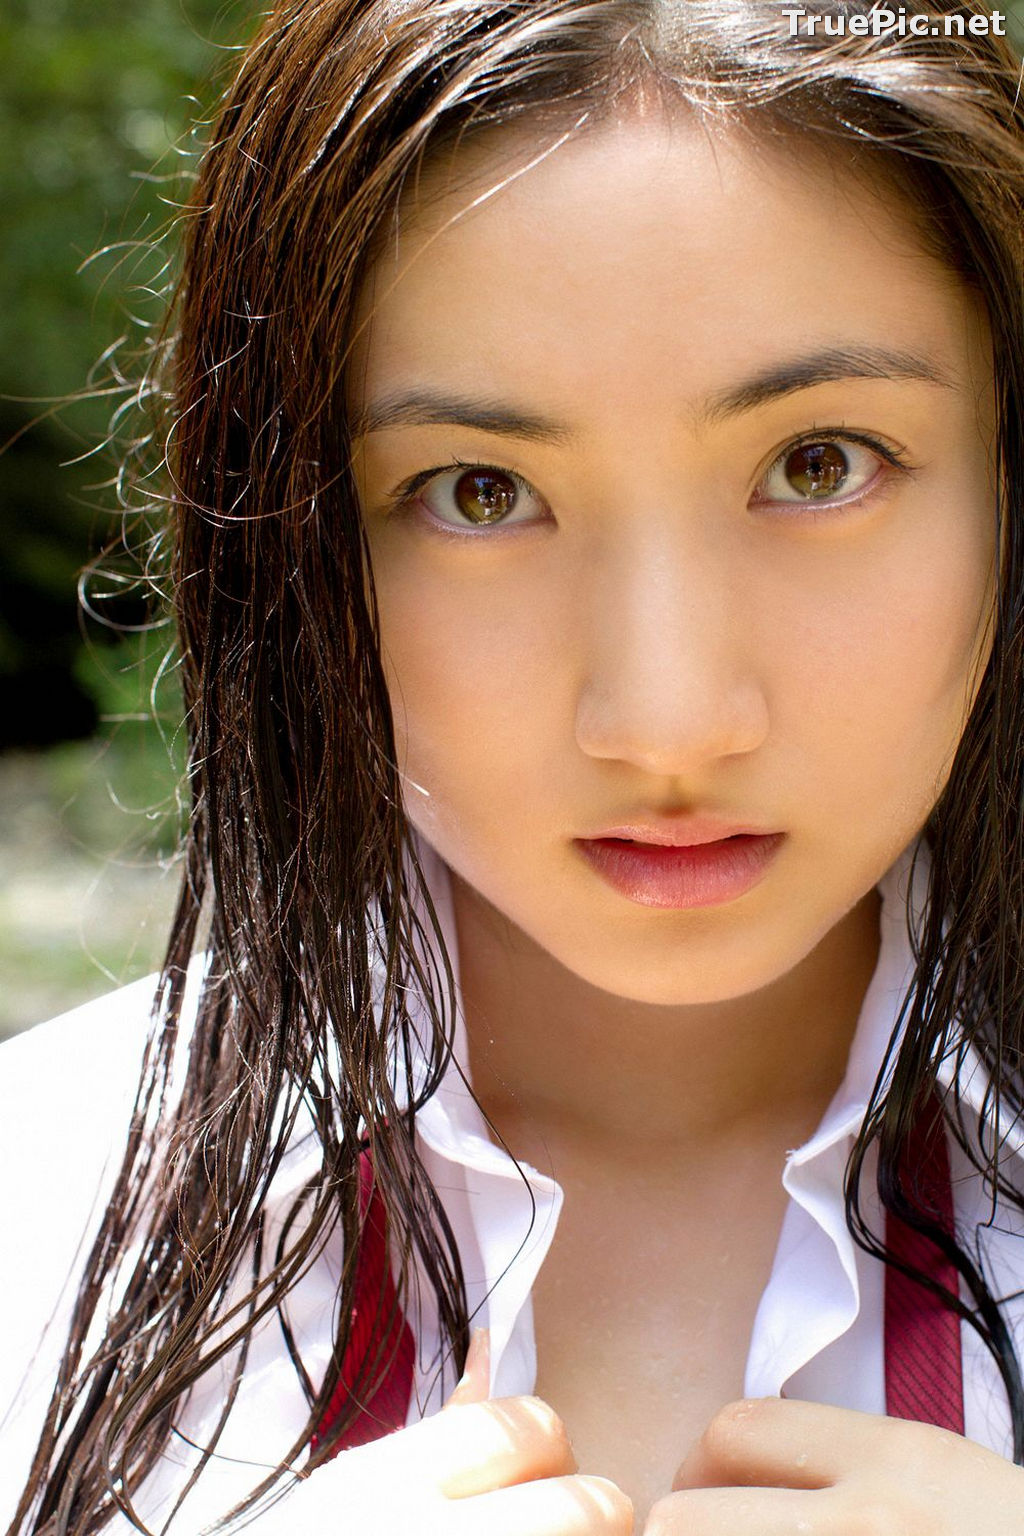 Image [YS Web] Vol.429 - Japanese Actress and Gravure Idol - Irie Saaya - TruePic.net - Picture-14